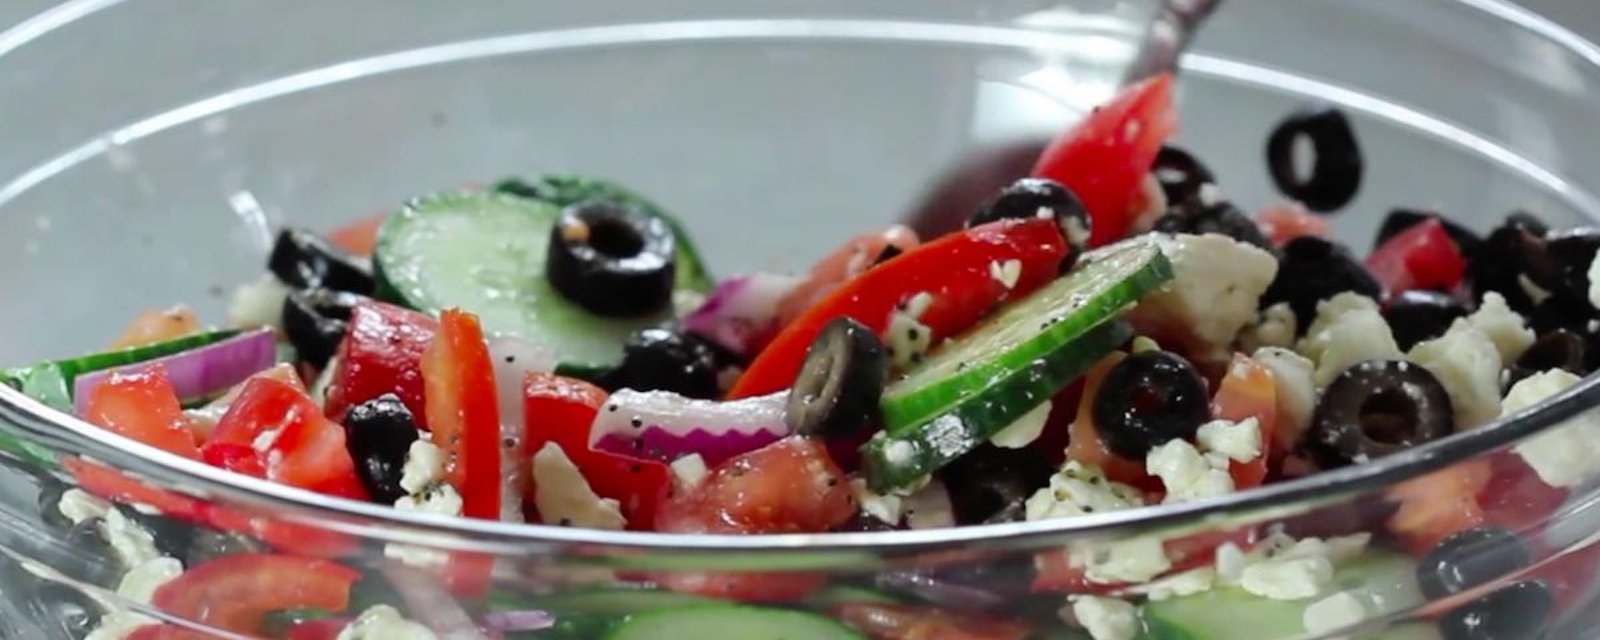 Recette facile: une succulente salade grecque estivale